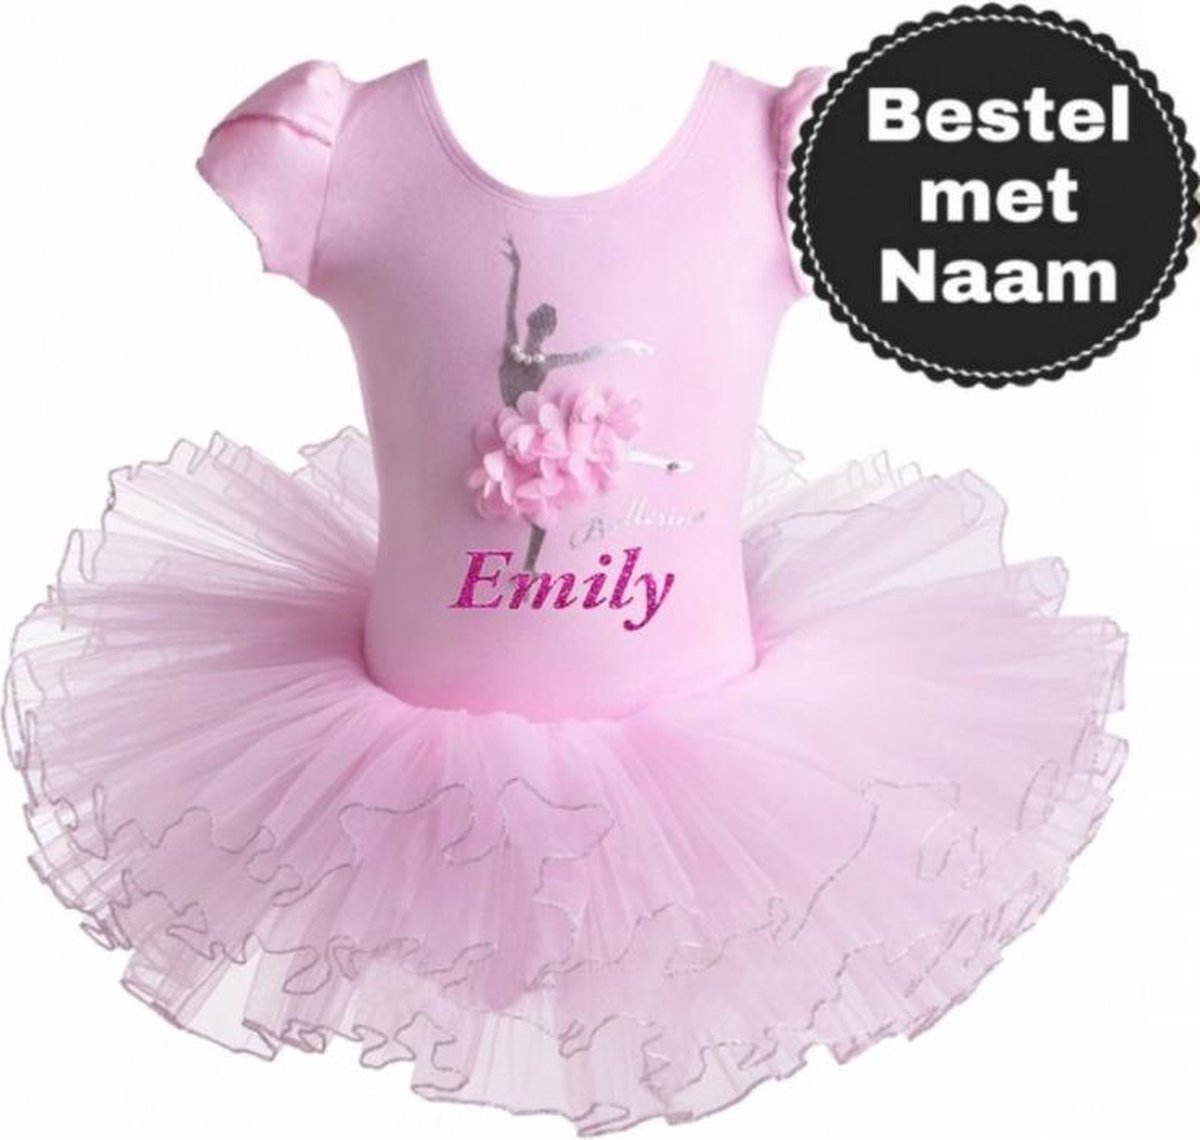 Balletpakje Ballerina + Eigen naam + Tutu - roze - Ballet - maat 116-122 prinsessen tutu verkleed jurk meisje